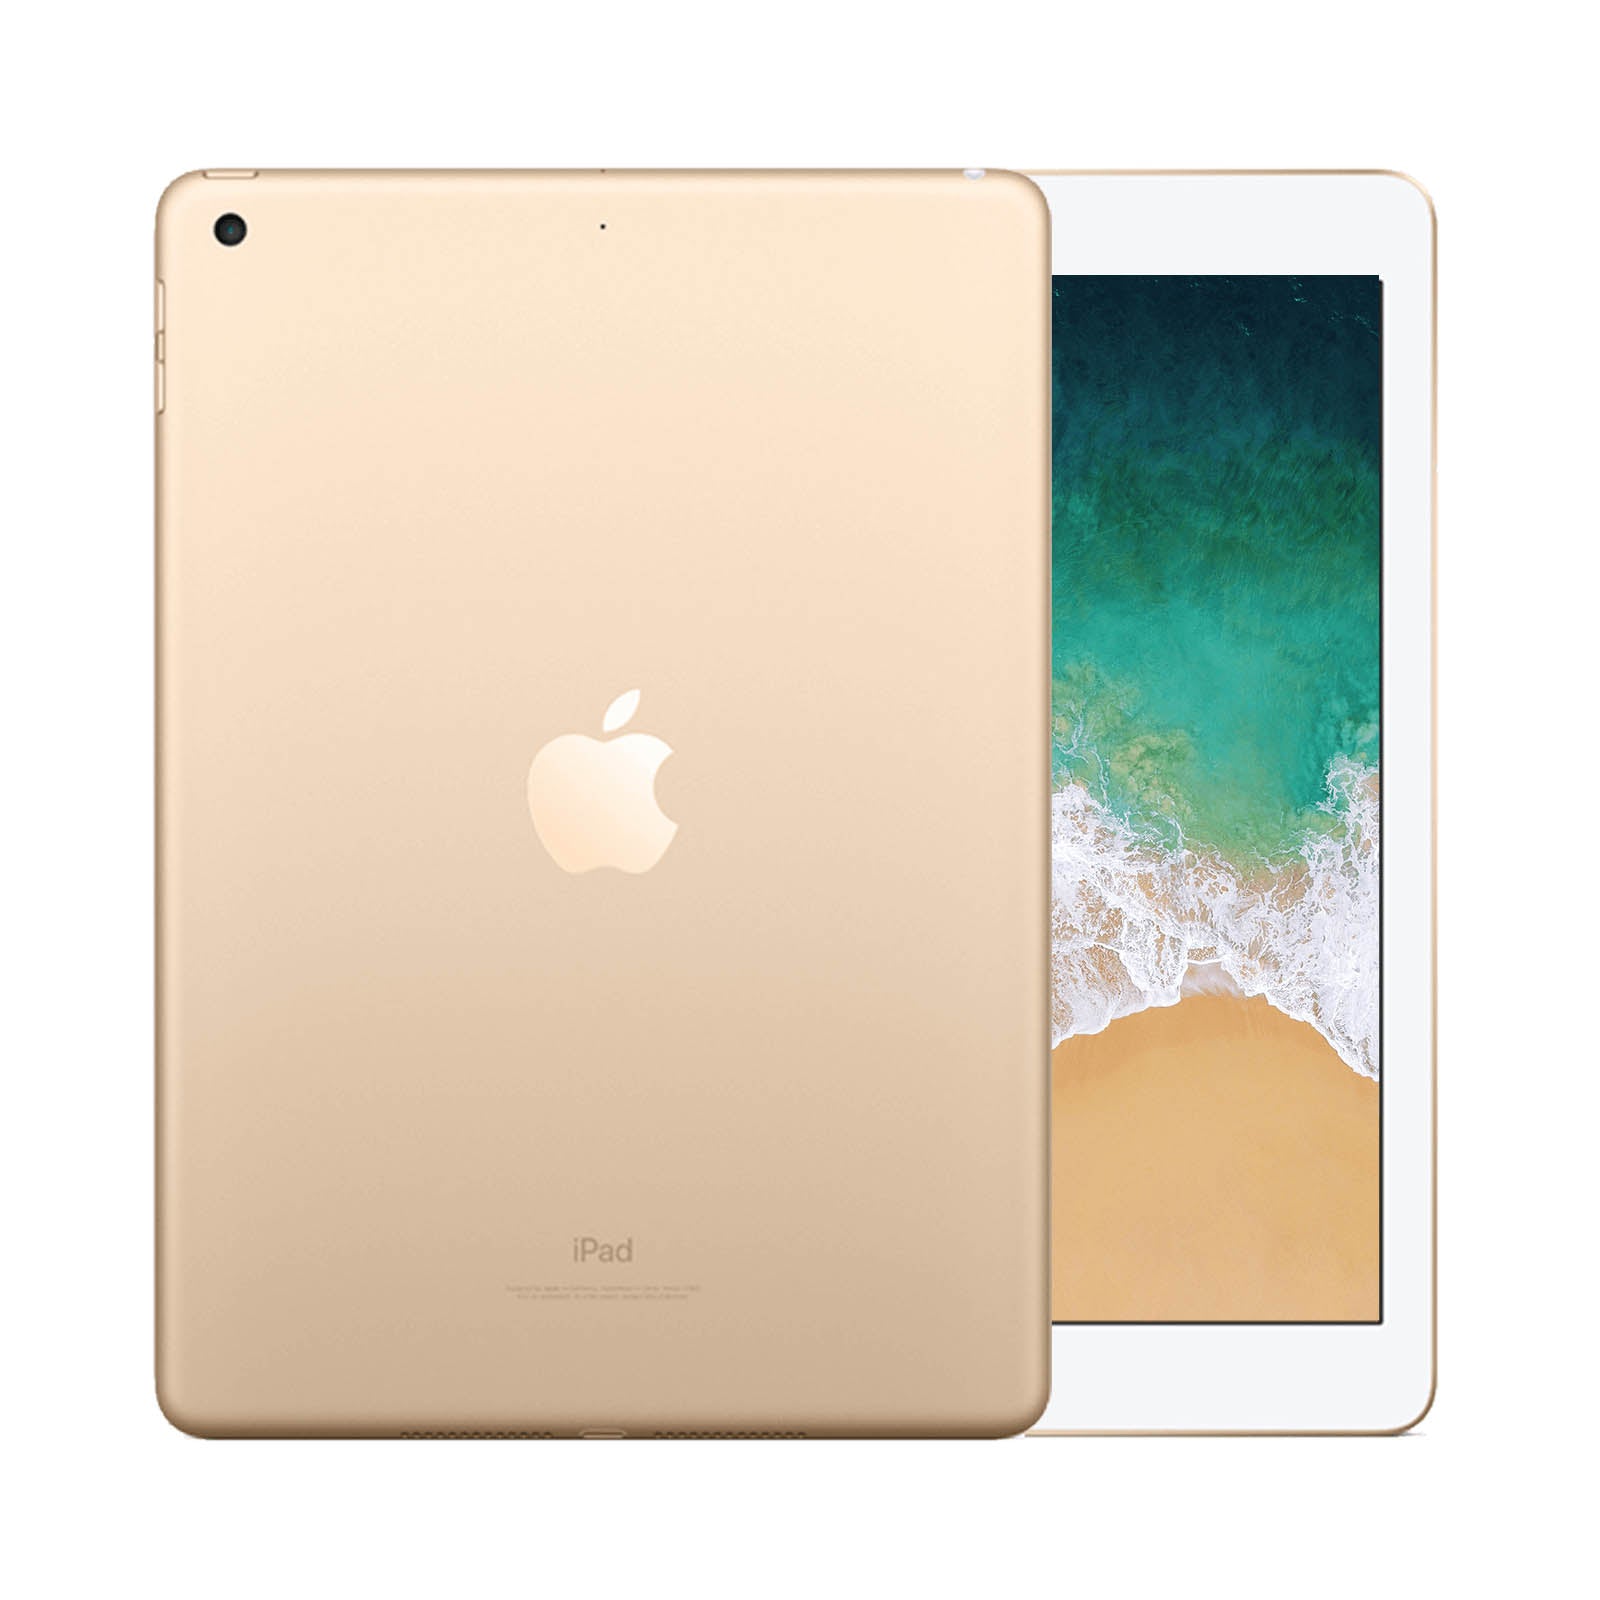 Apple iPad 5 32GB WiFi Gold Gut